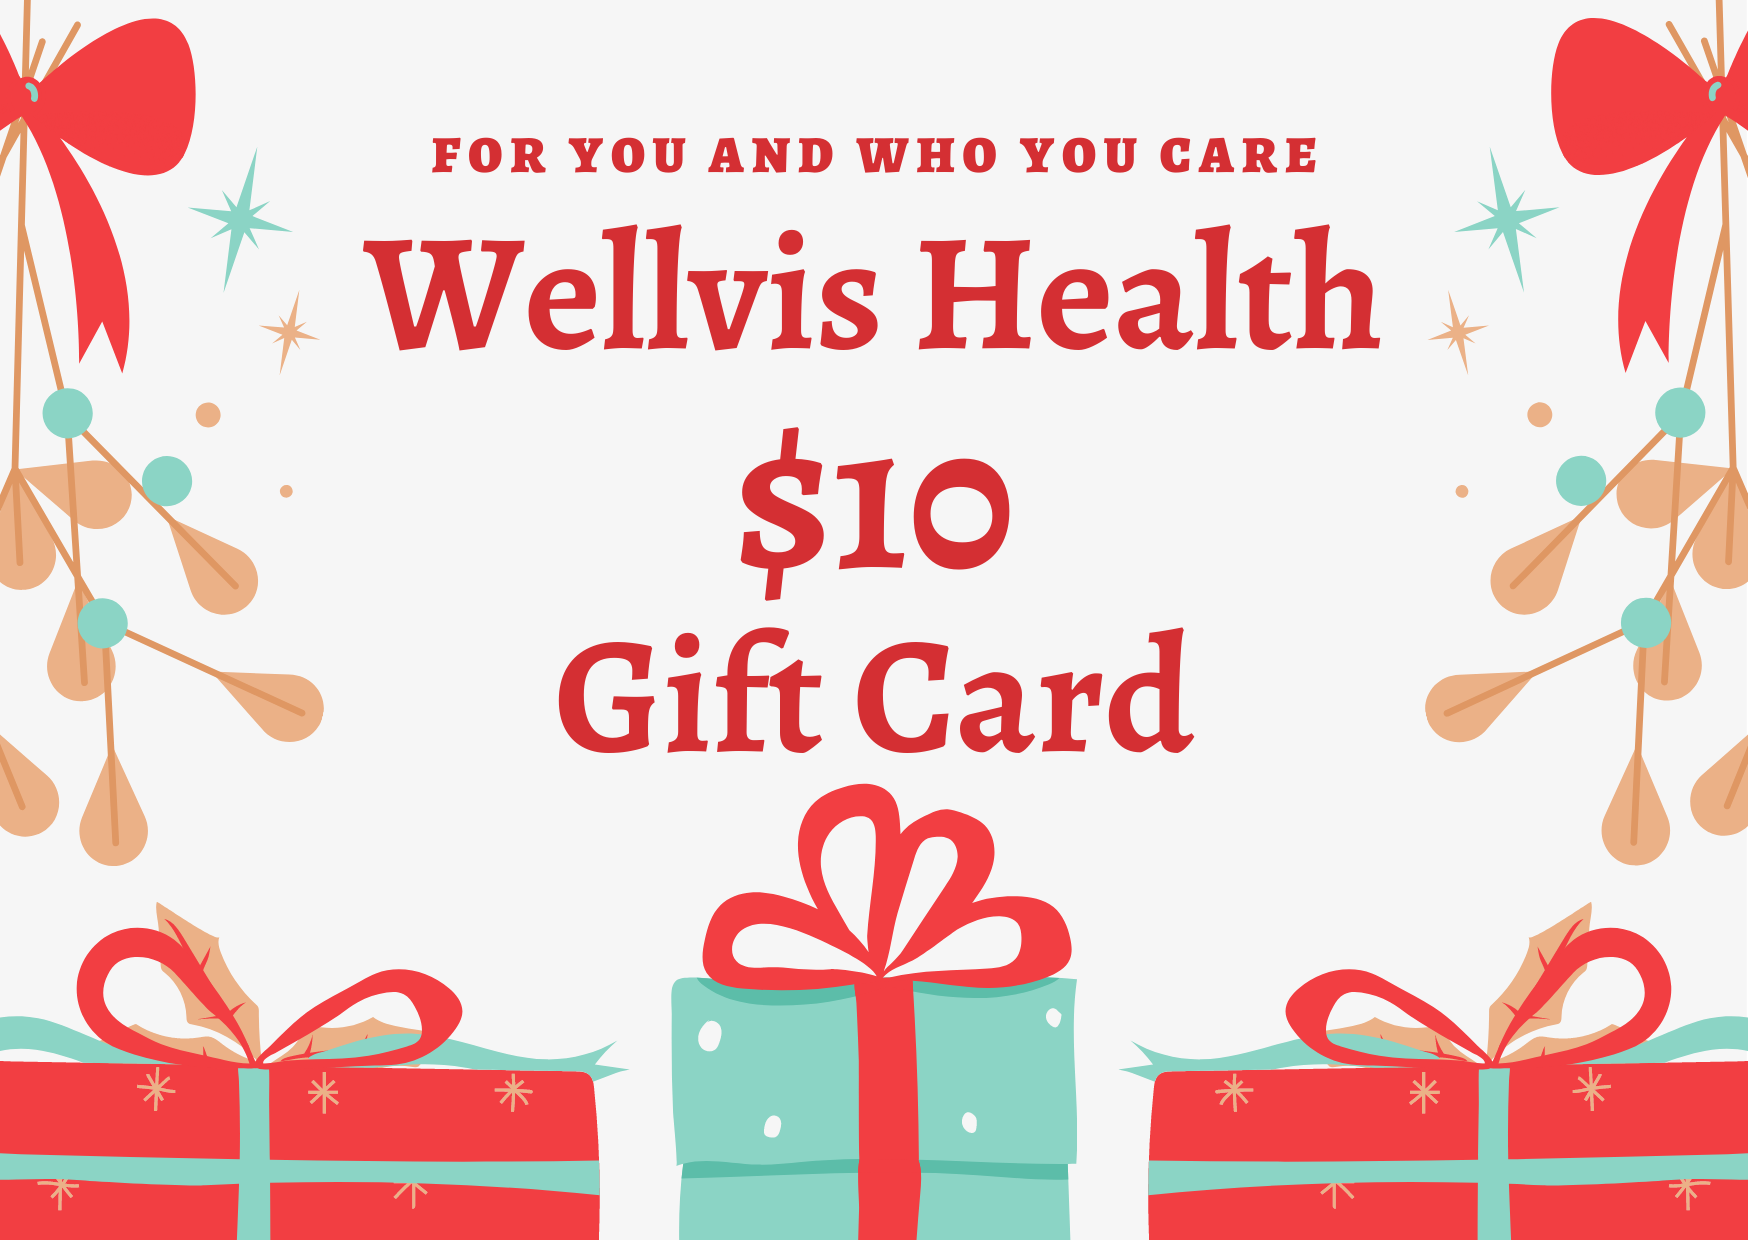 Wellvis $10 Gift Card